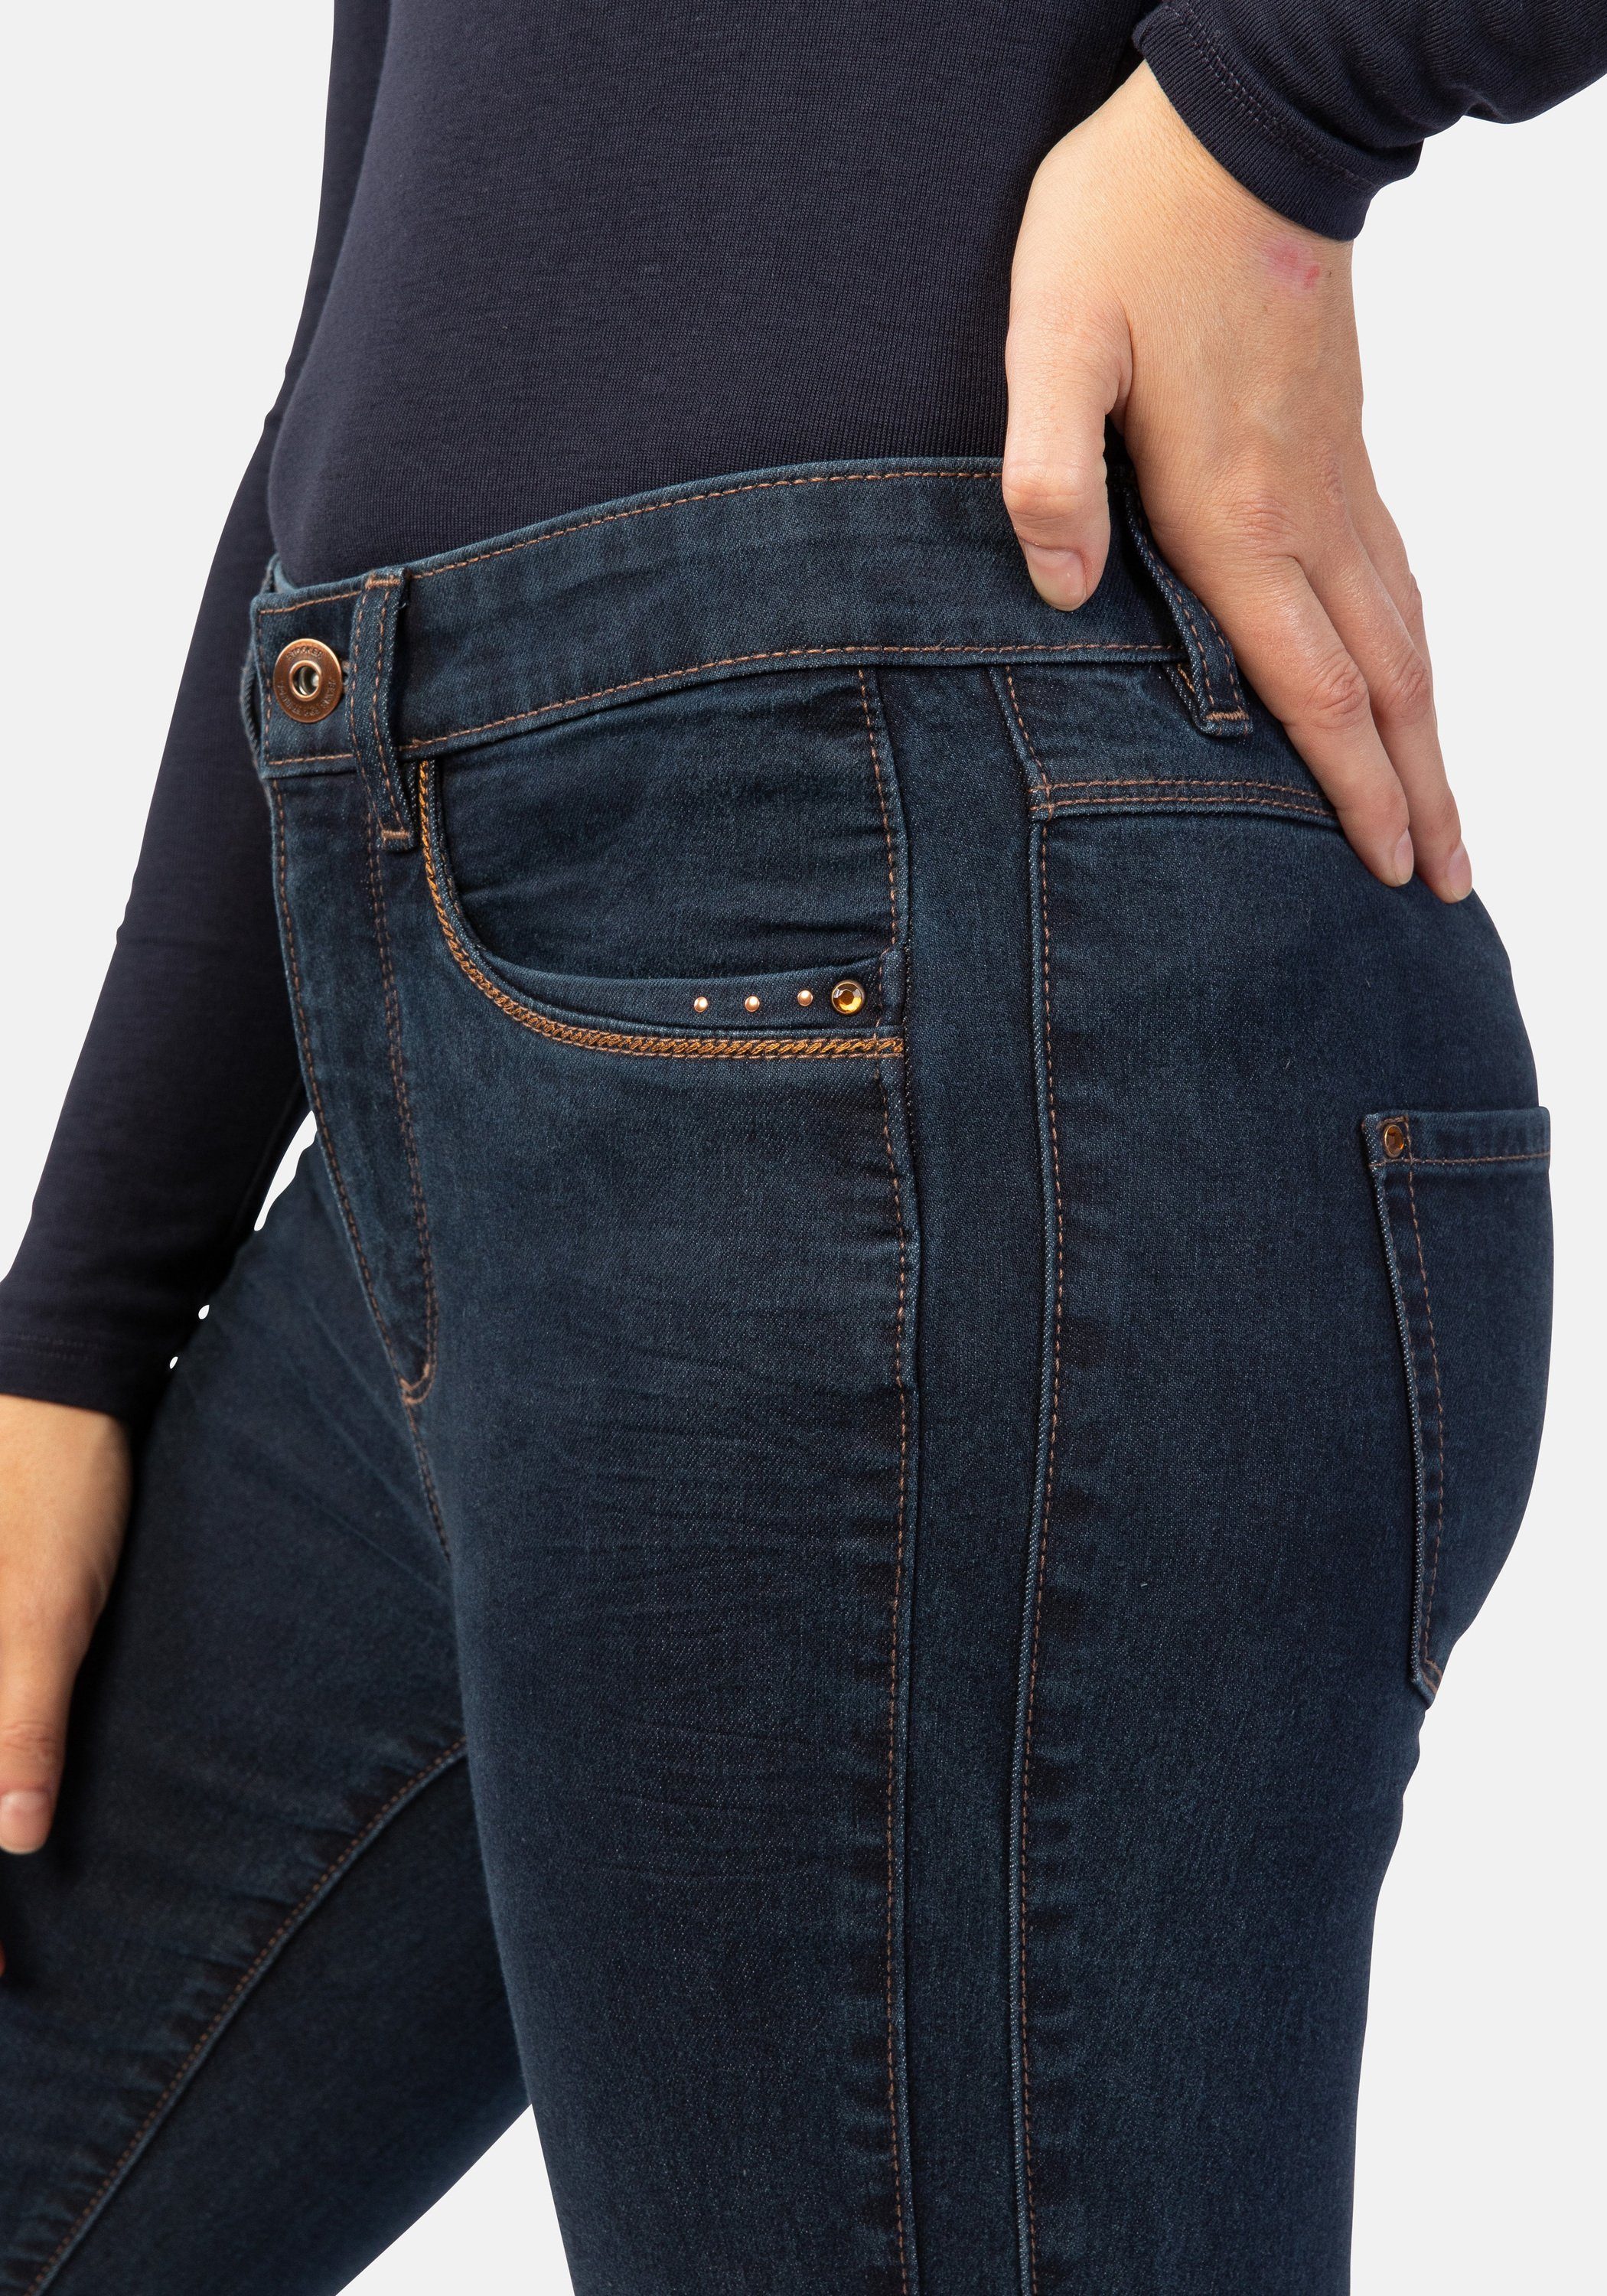 Season 5-Pocket-Jeans WOMEN blue STOOKER Skinny Denim Rio rinse Fit